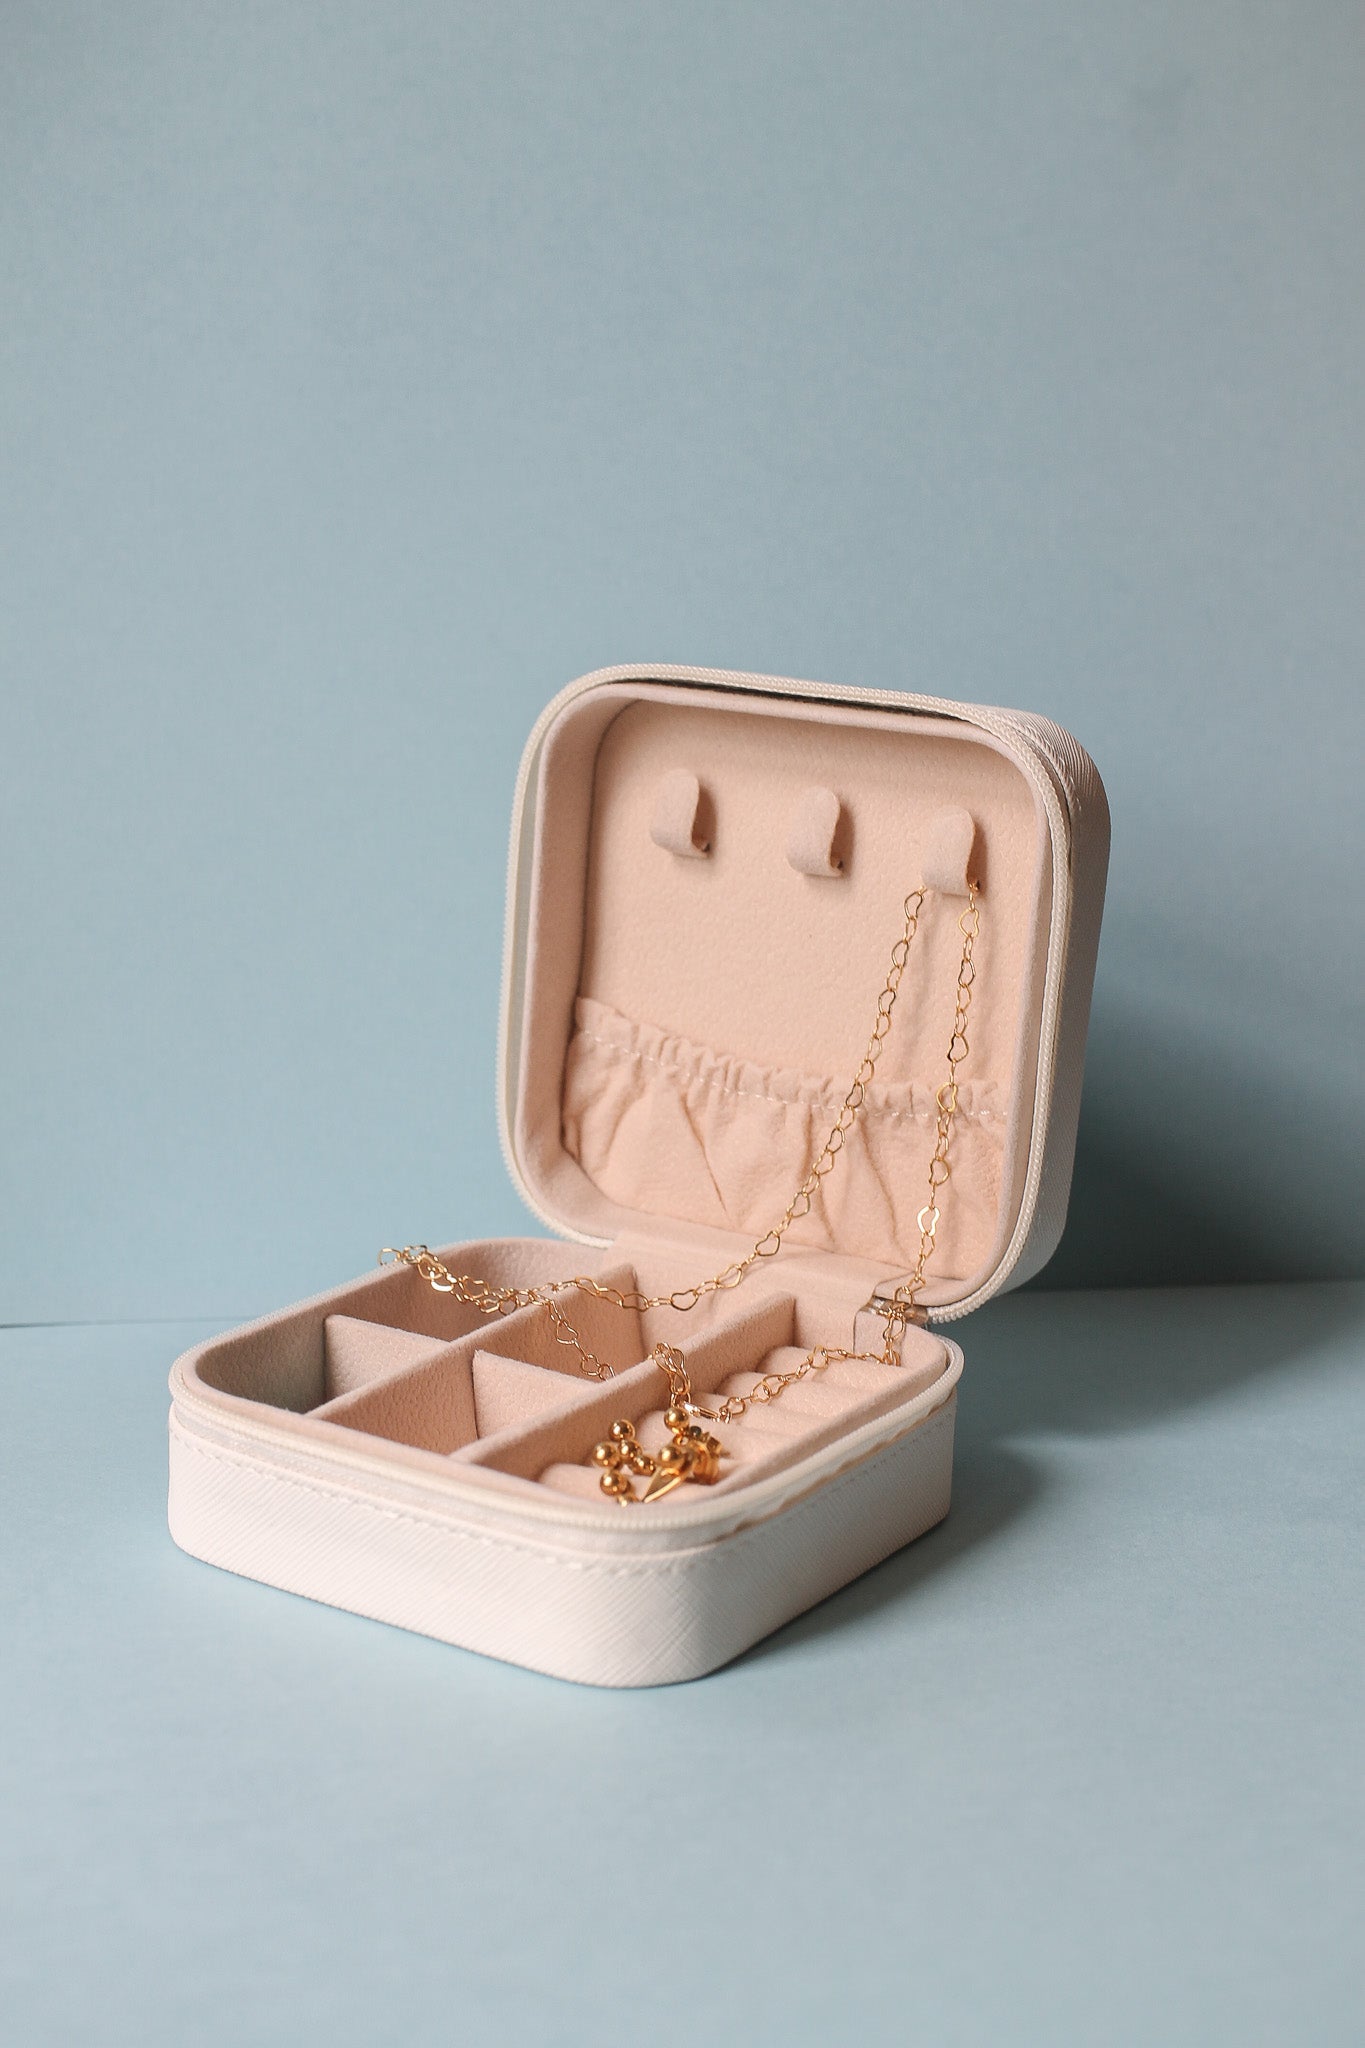 Mystery Jewelry Box in White